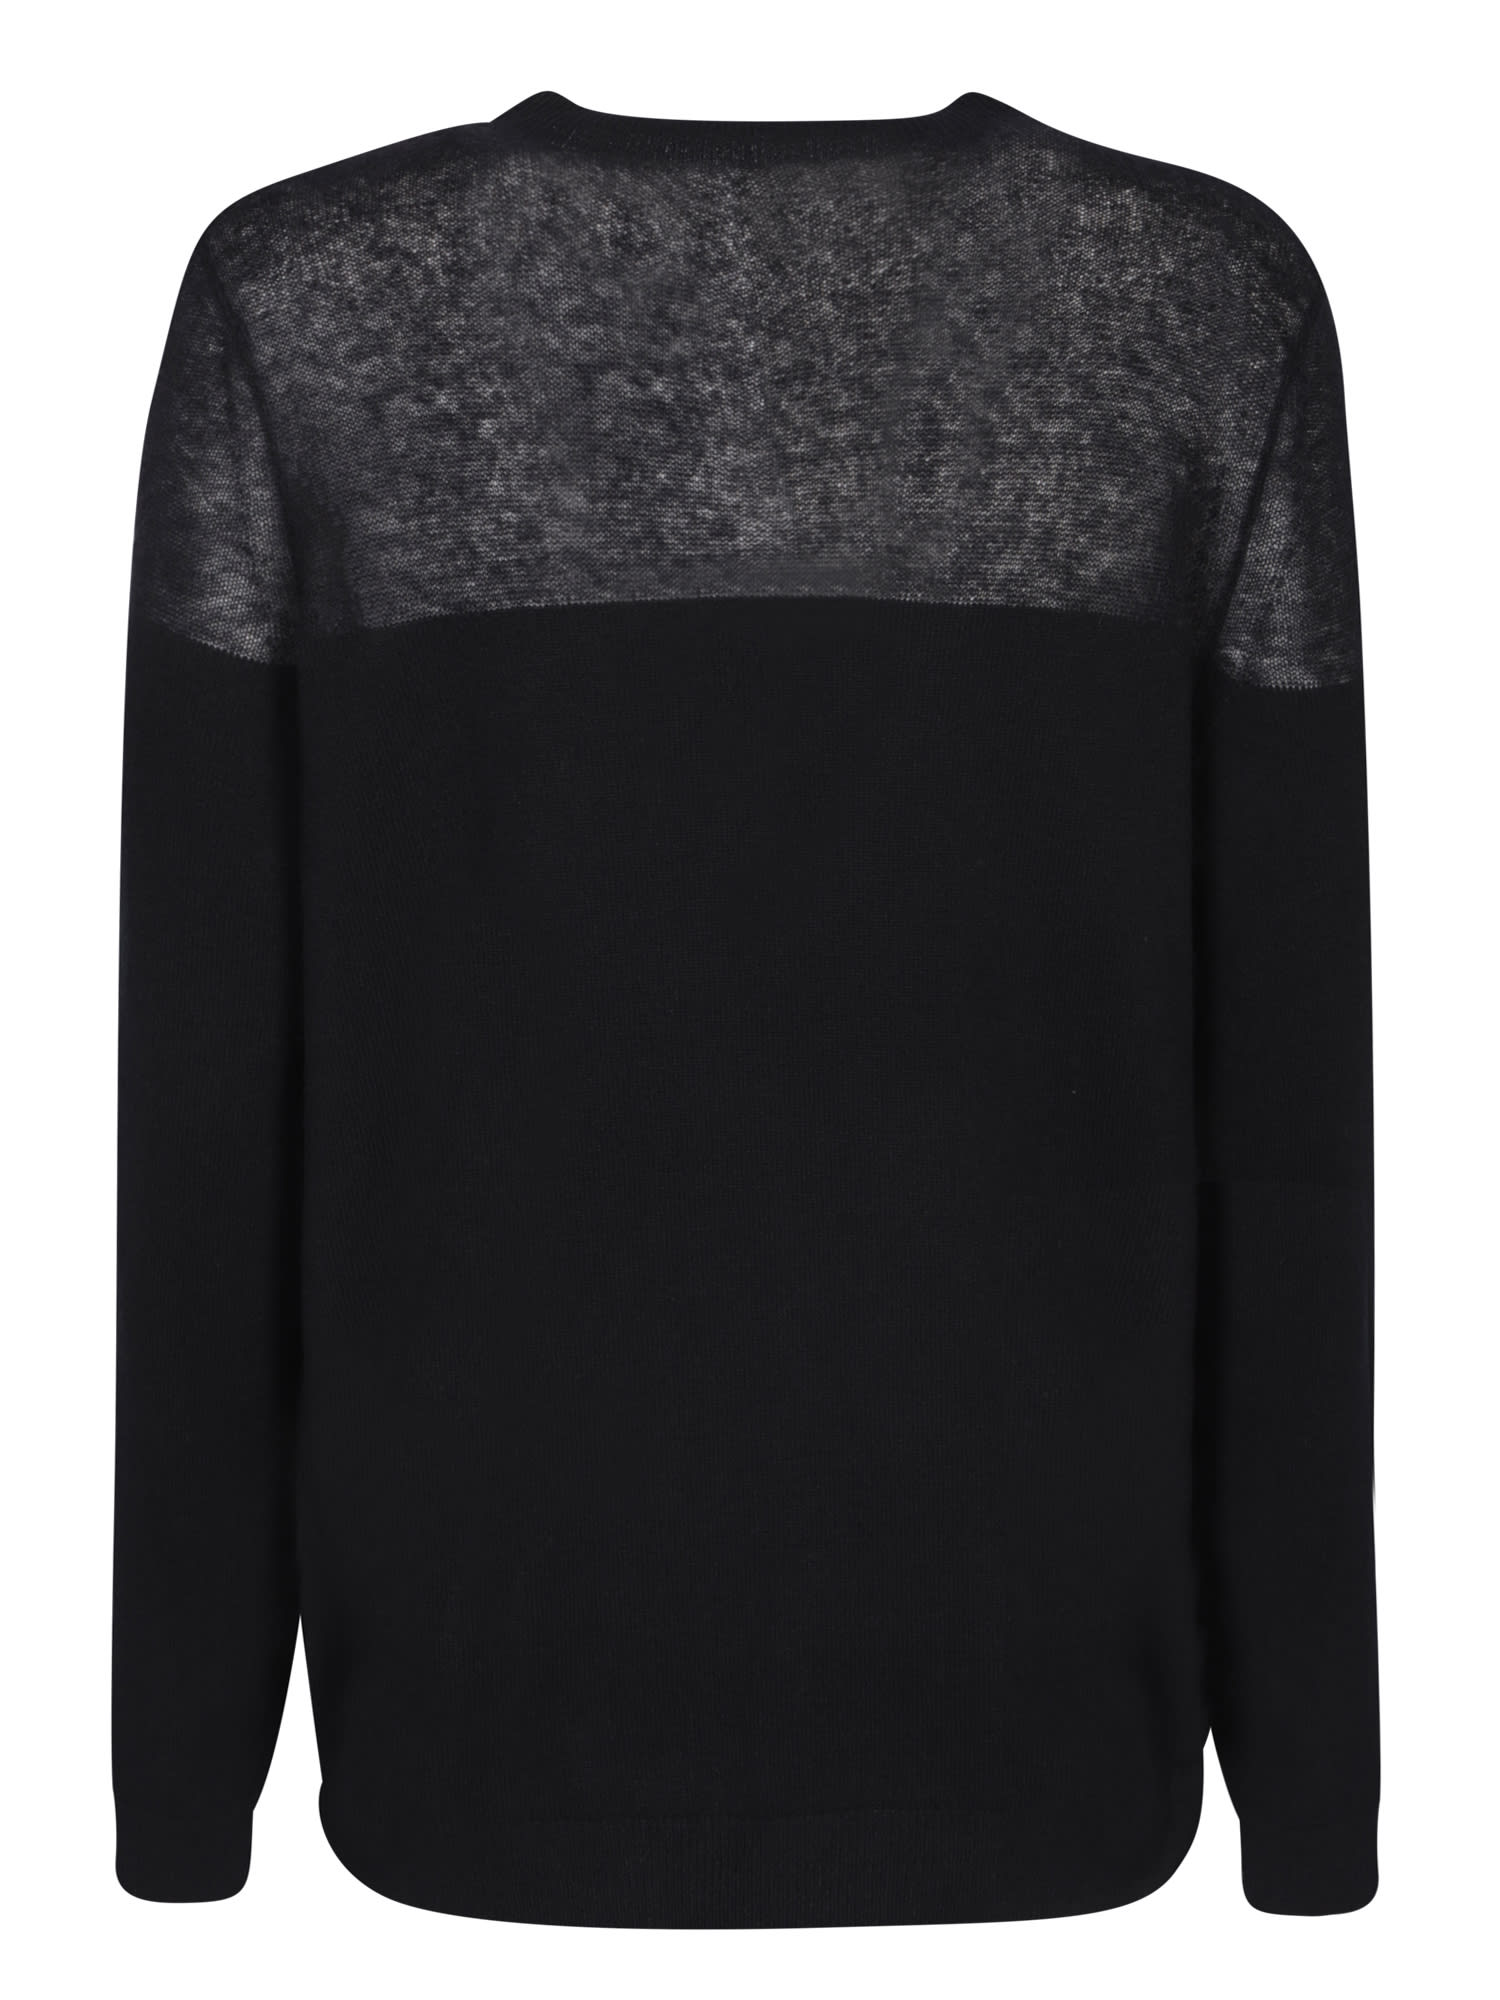 Shop Fabiana Filippi Premium Yarn Black Sweater